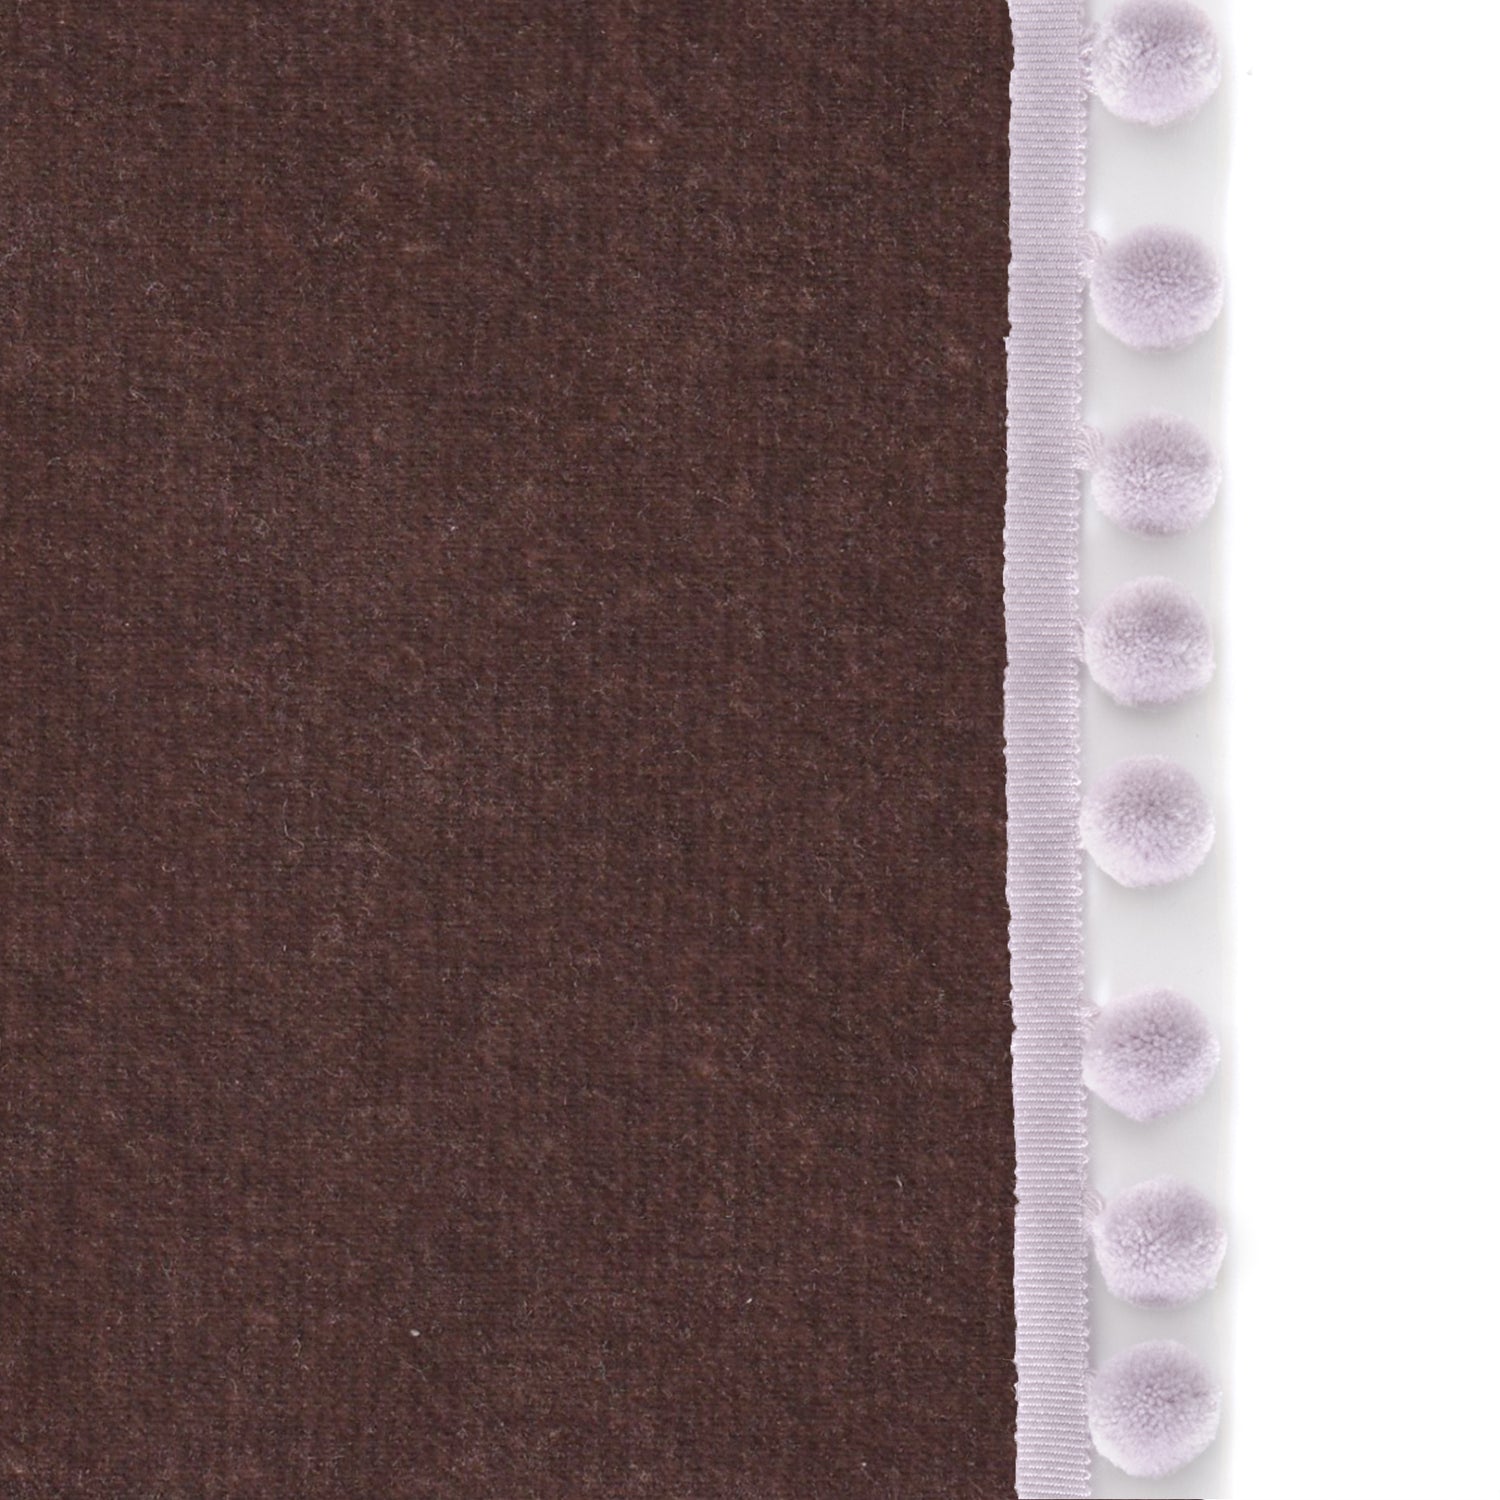 Upclose picture of Walnut Velvet custom curtain with lilac pom pom trim